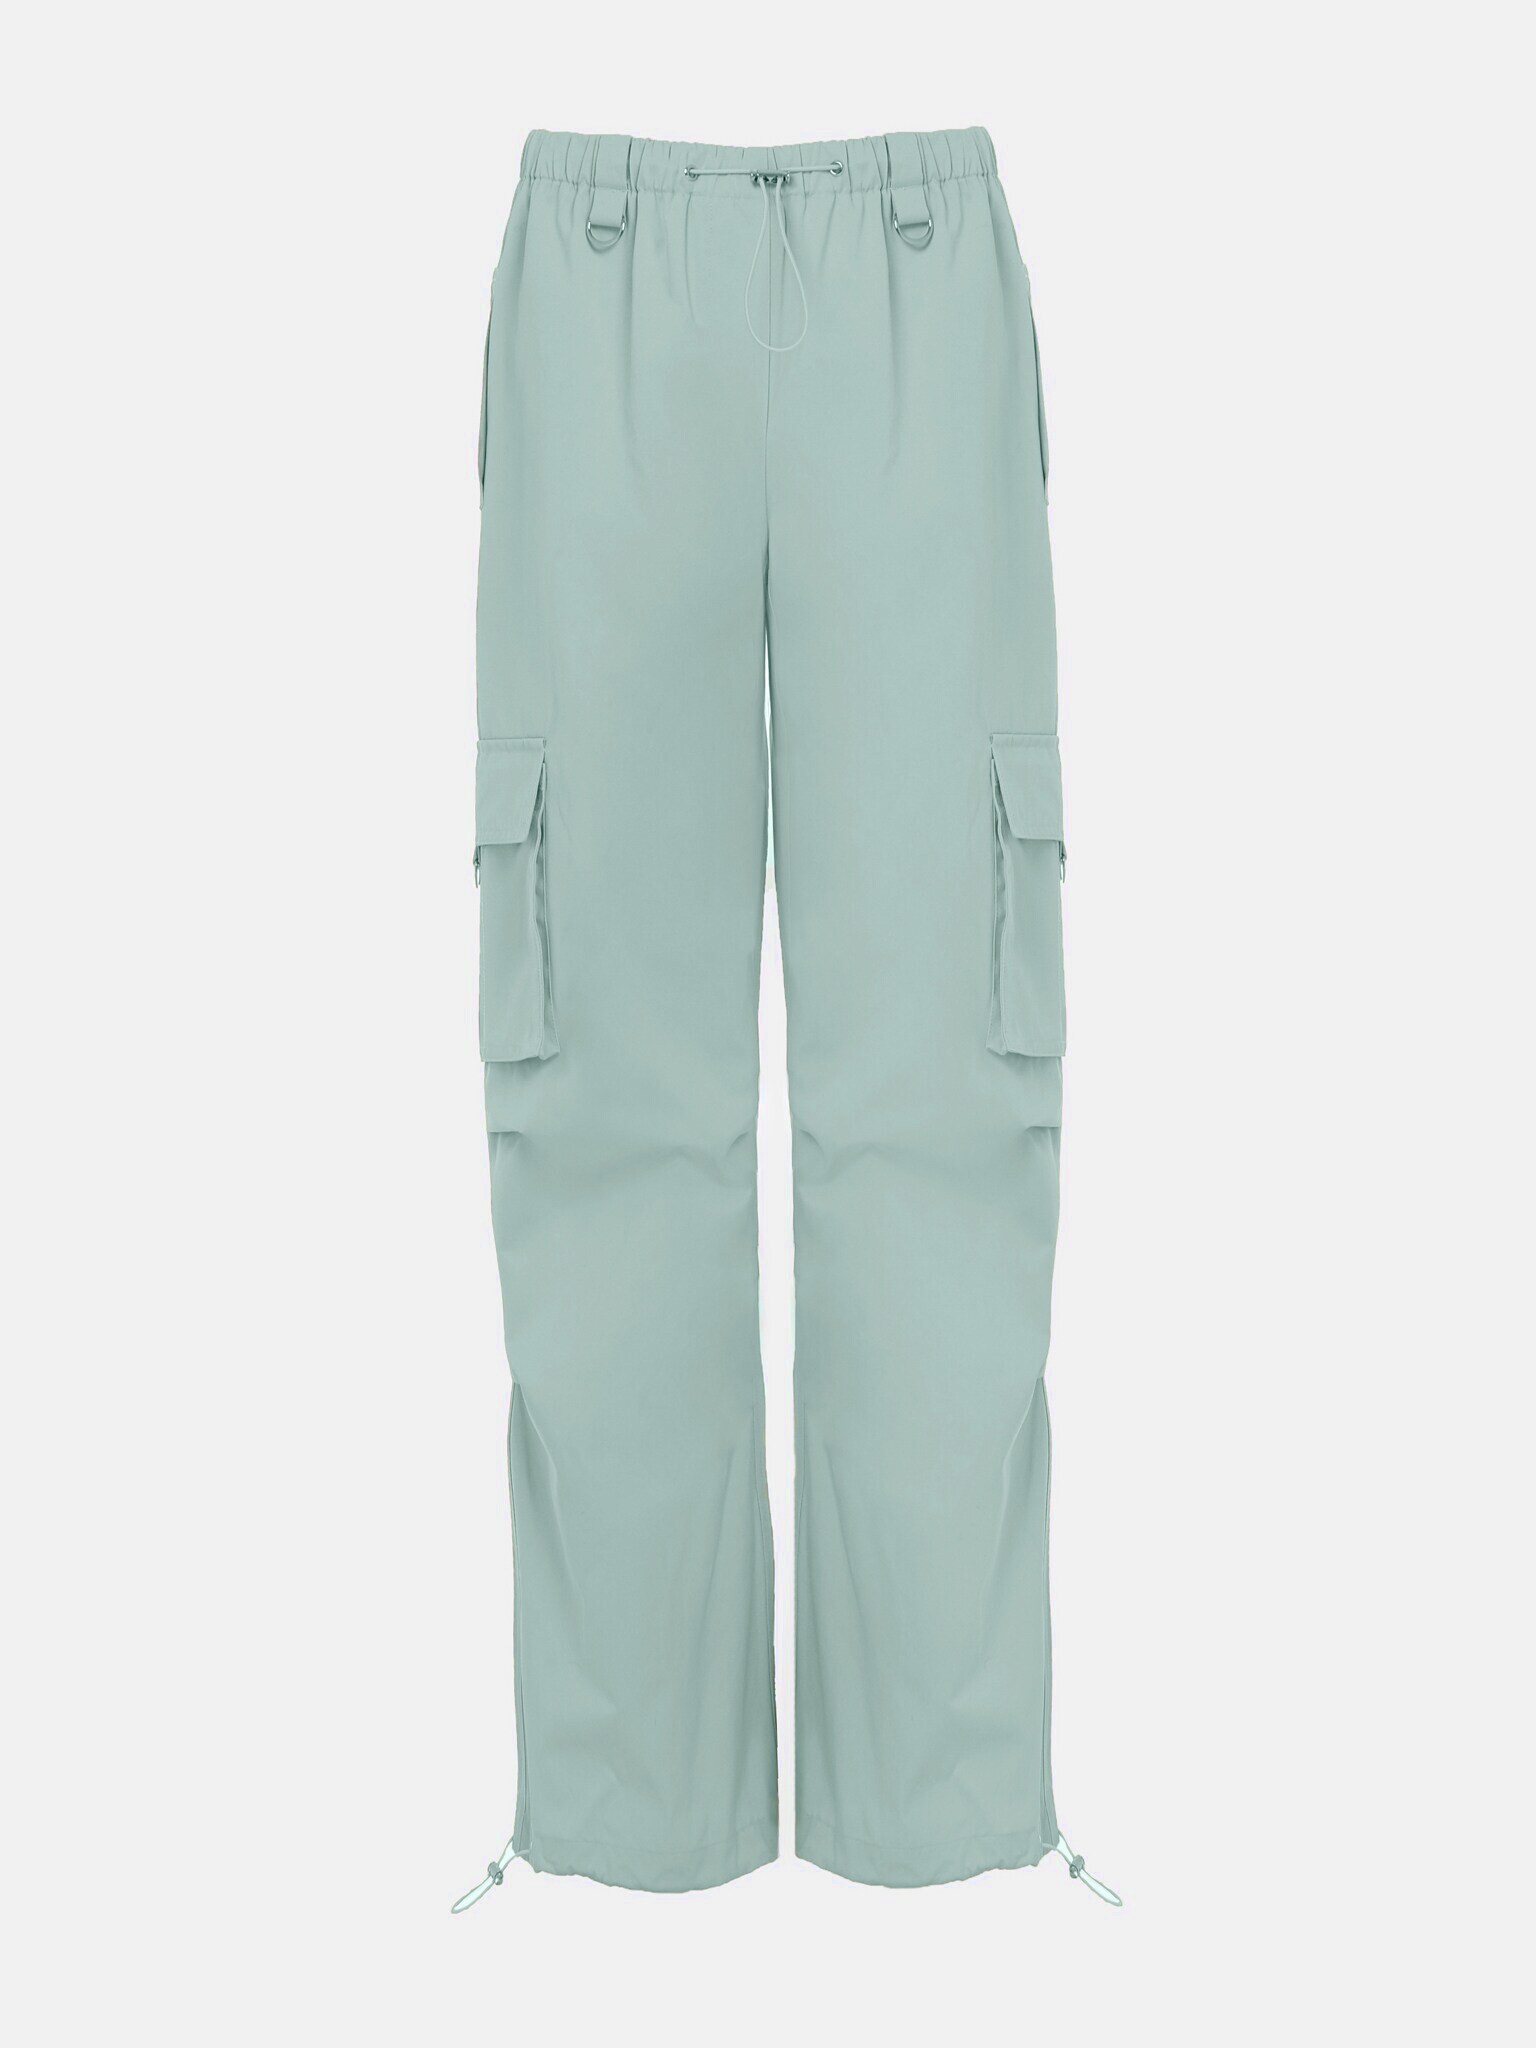 Buy Green Trousers & Pants for Men by Truser Online | Ajio.com